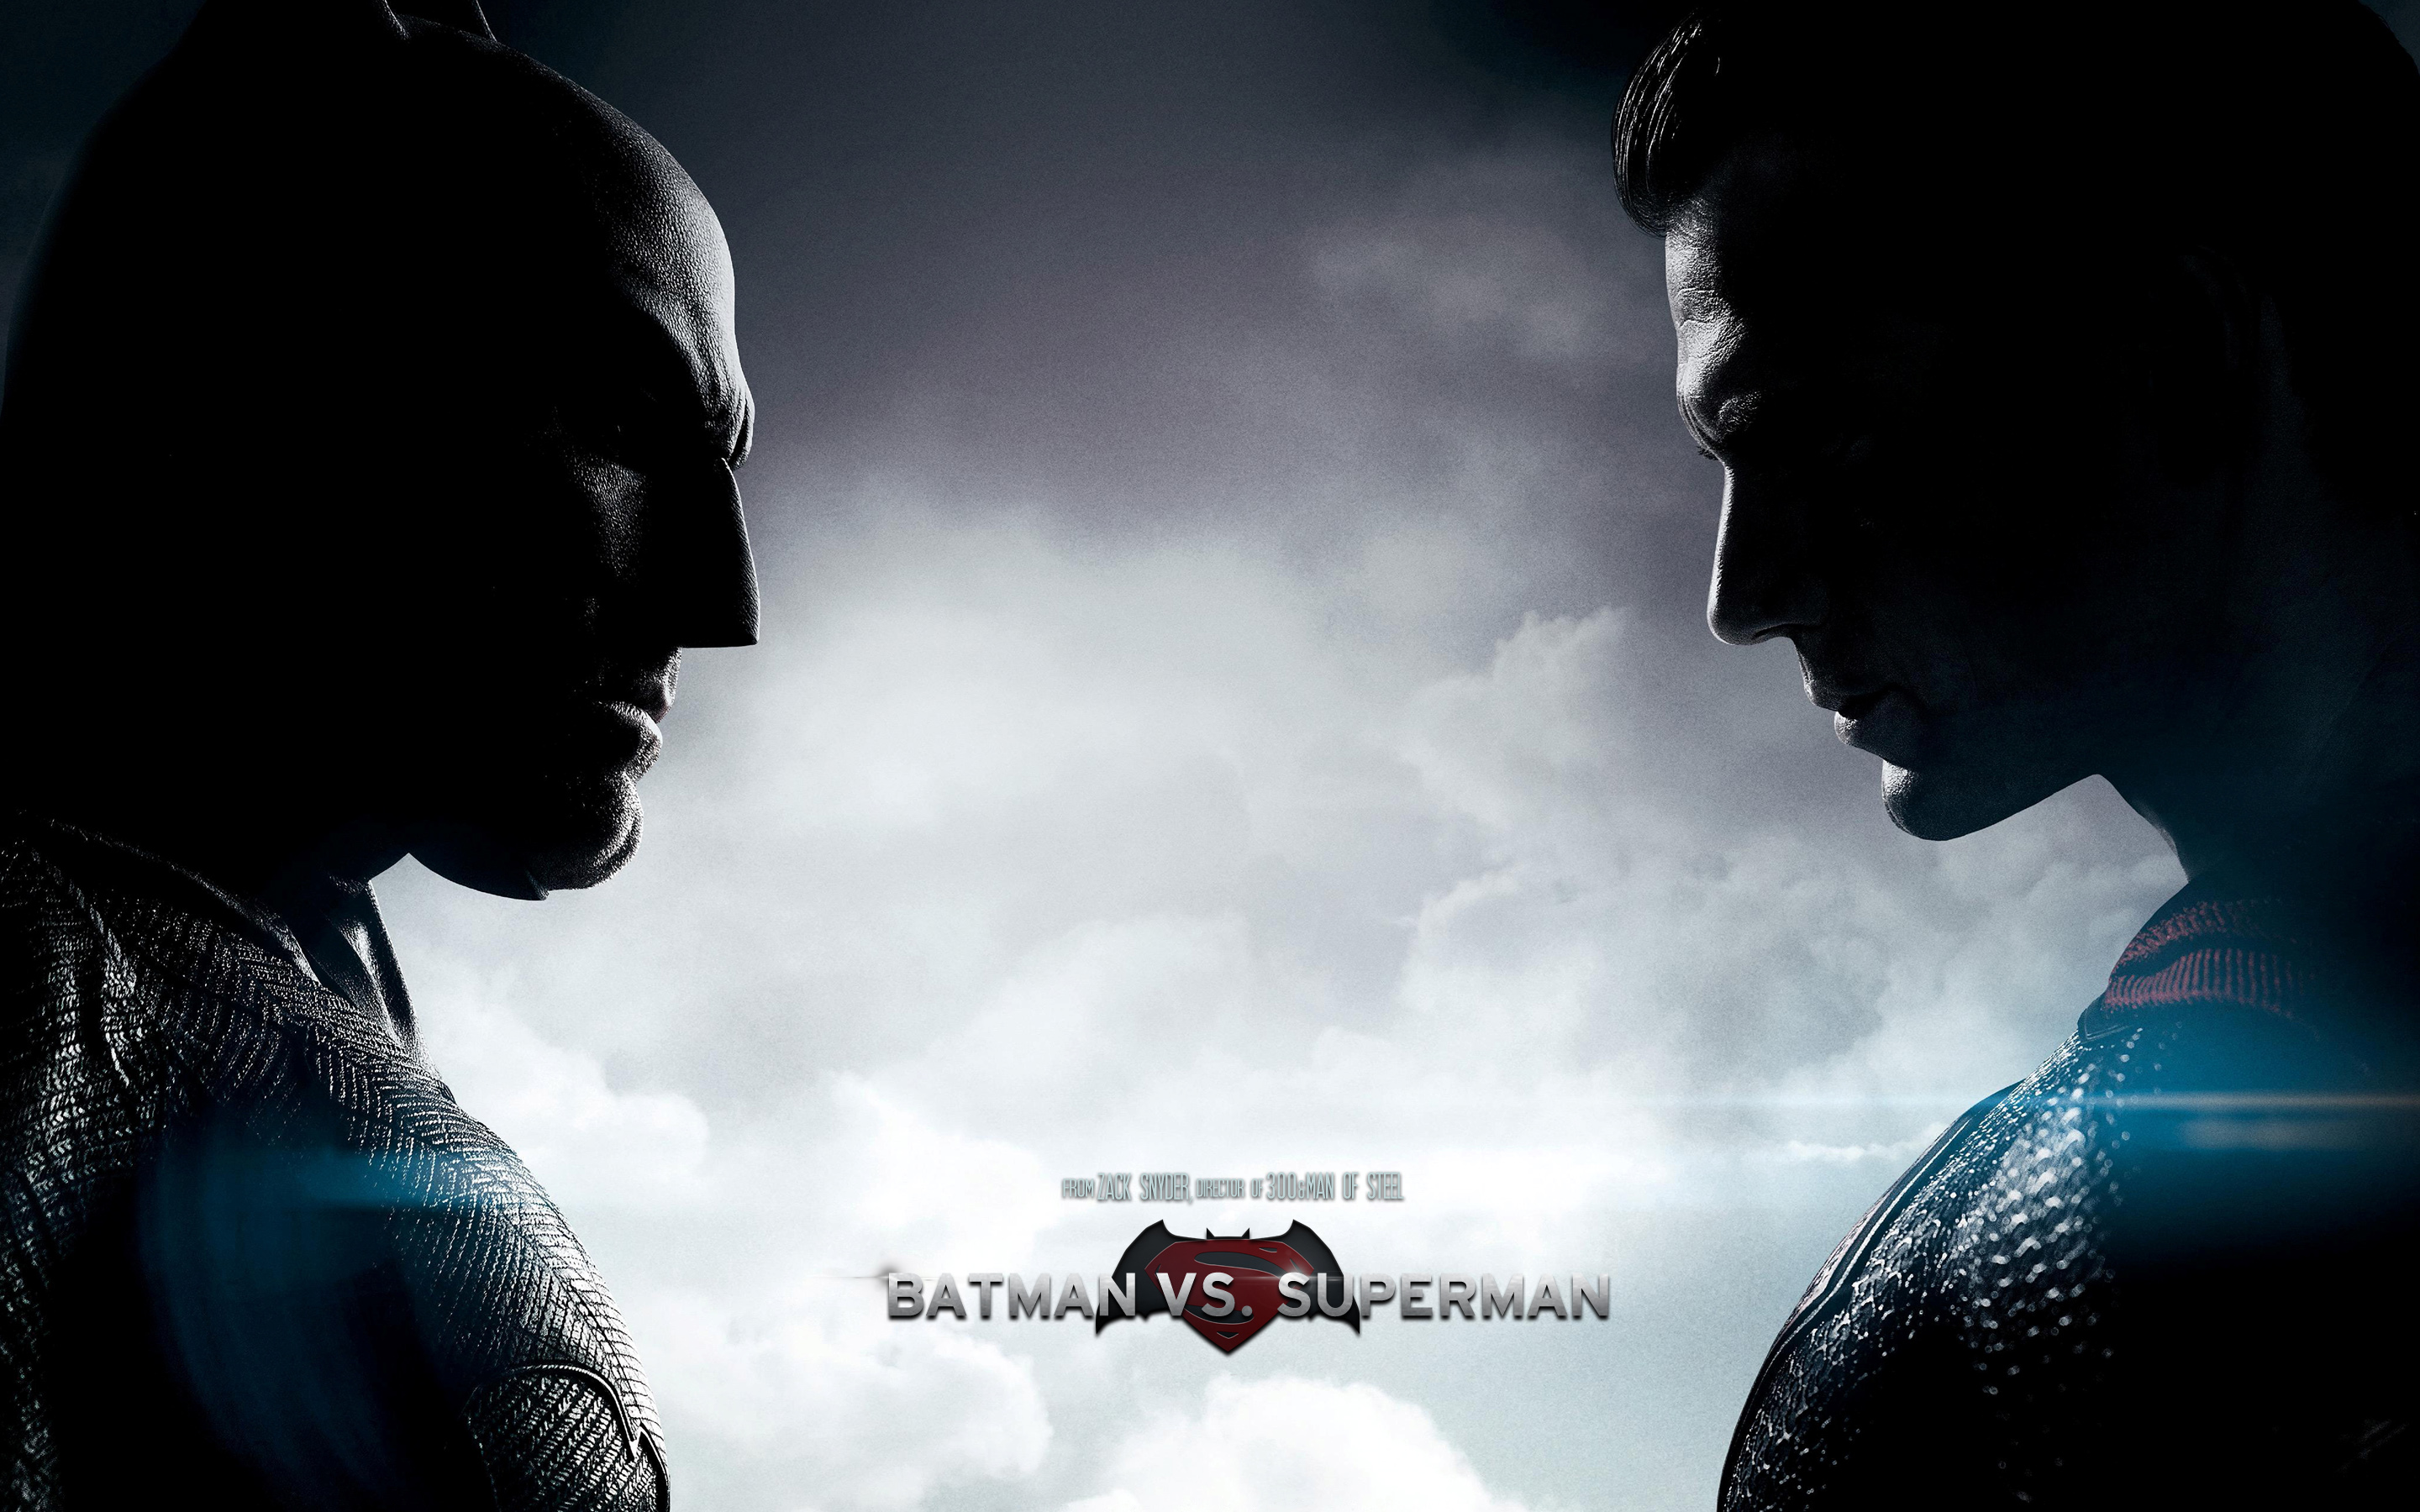 HD Wallpaper Batman Vs Superman In Many Size Ranging From